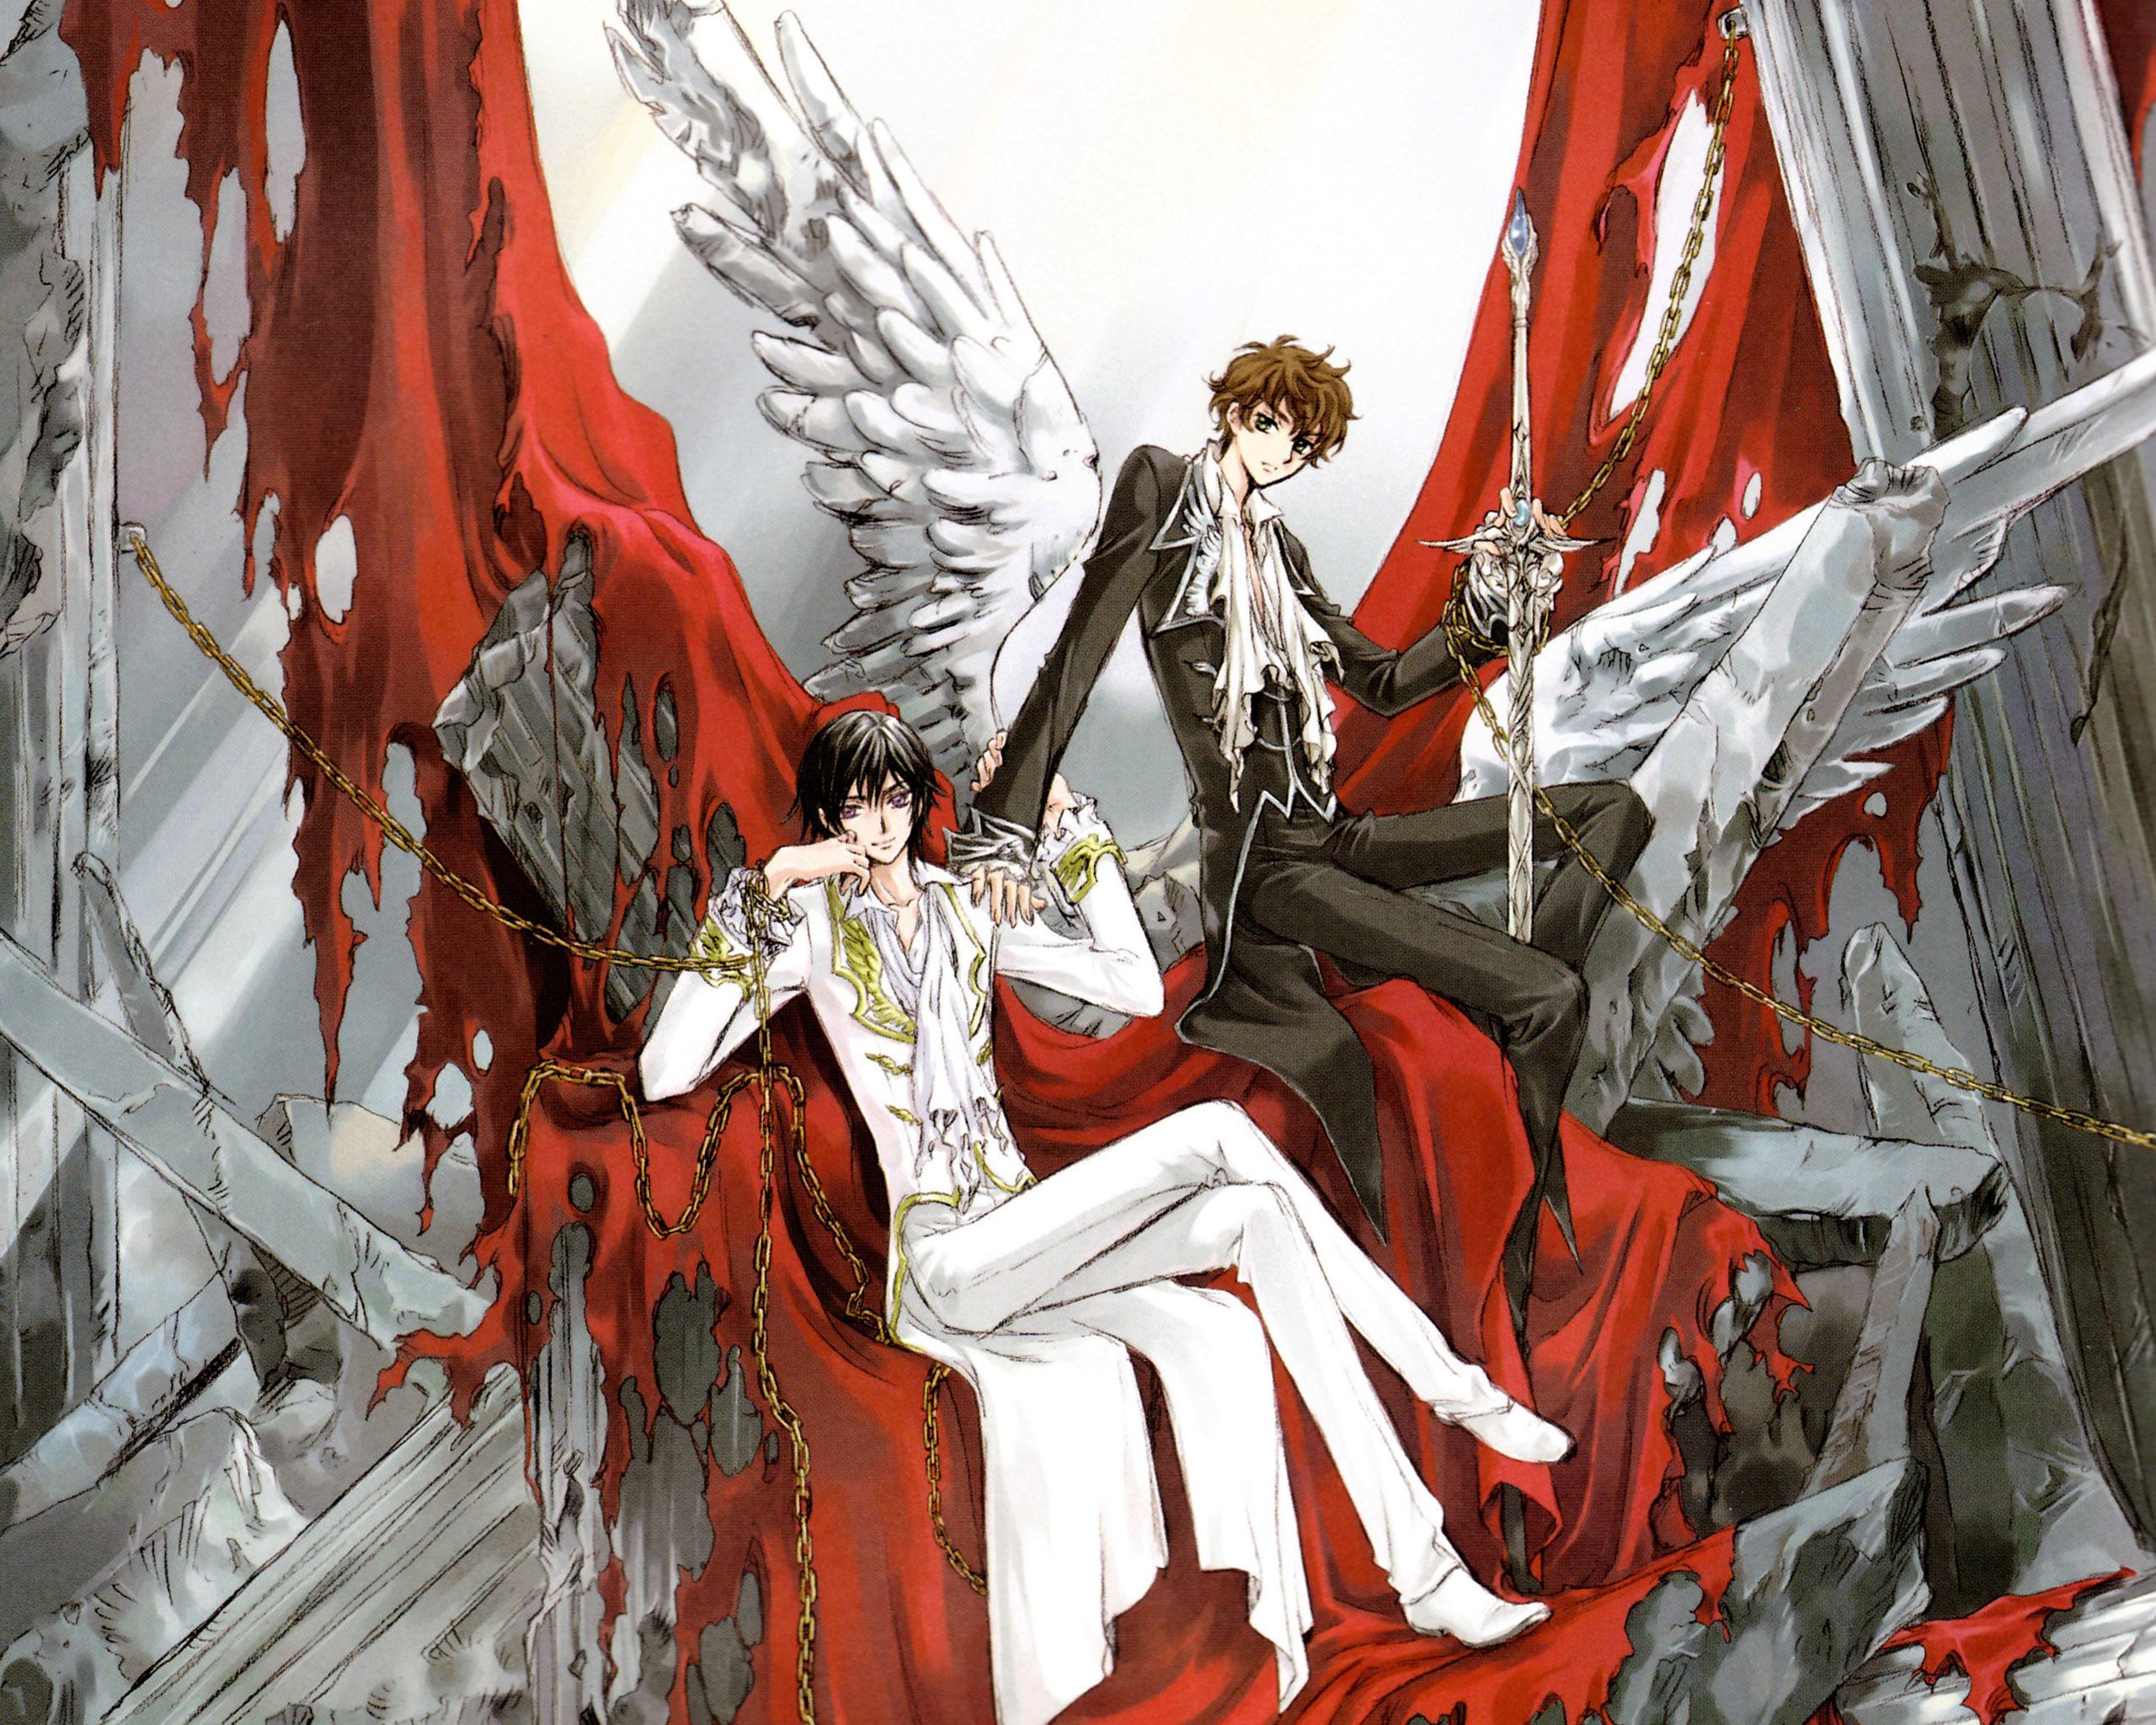 Wallpaper] Lelouch Lamperouge and Suzaku Kururugi from Code Geass :  r/AnimeVisualArts